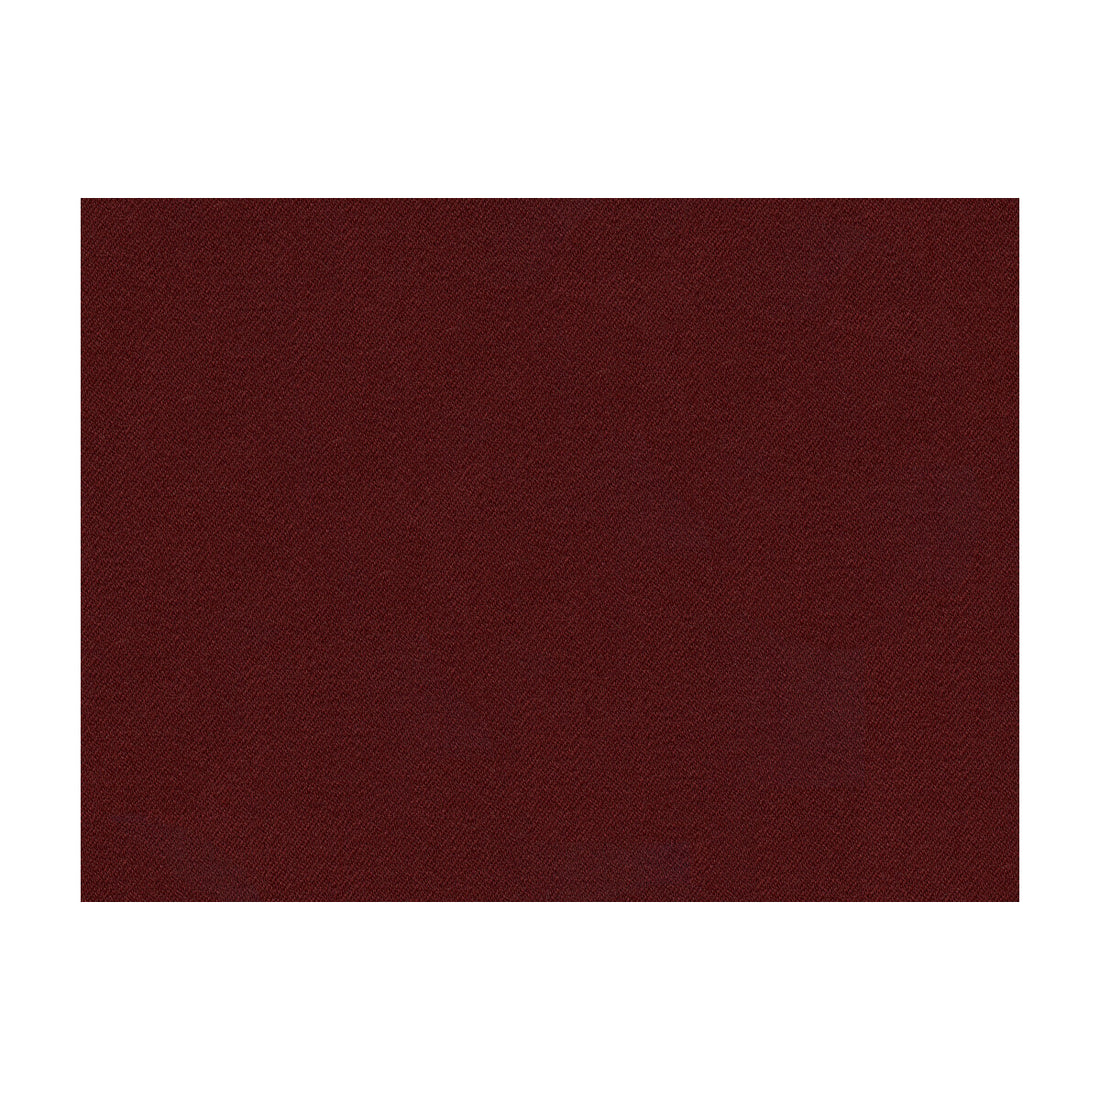 Fyvie Wool Satin fabric in burgundy color - pattern BR-89768.188.0 - by Brunschwig &amp; Fils